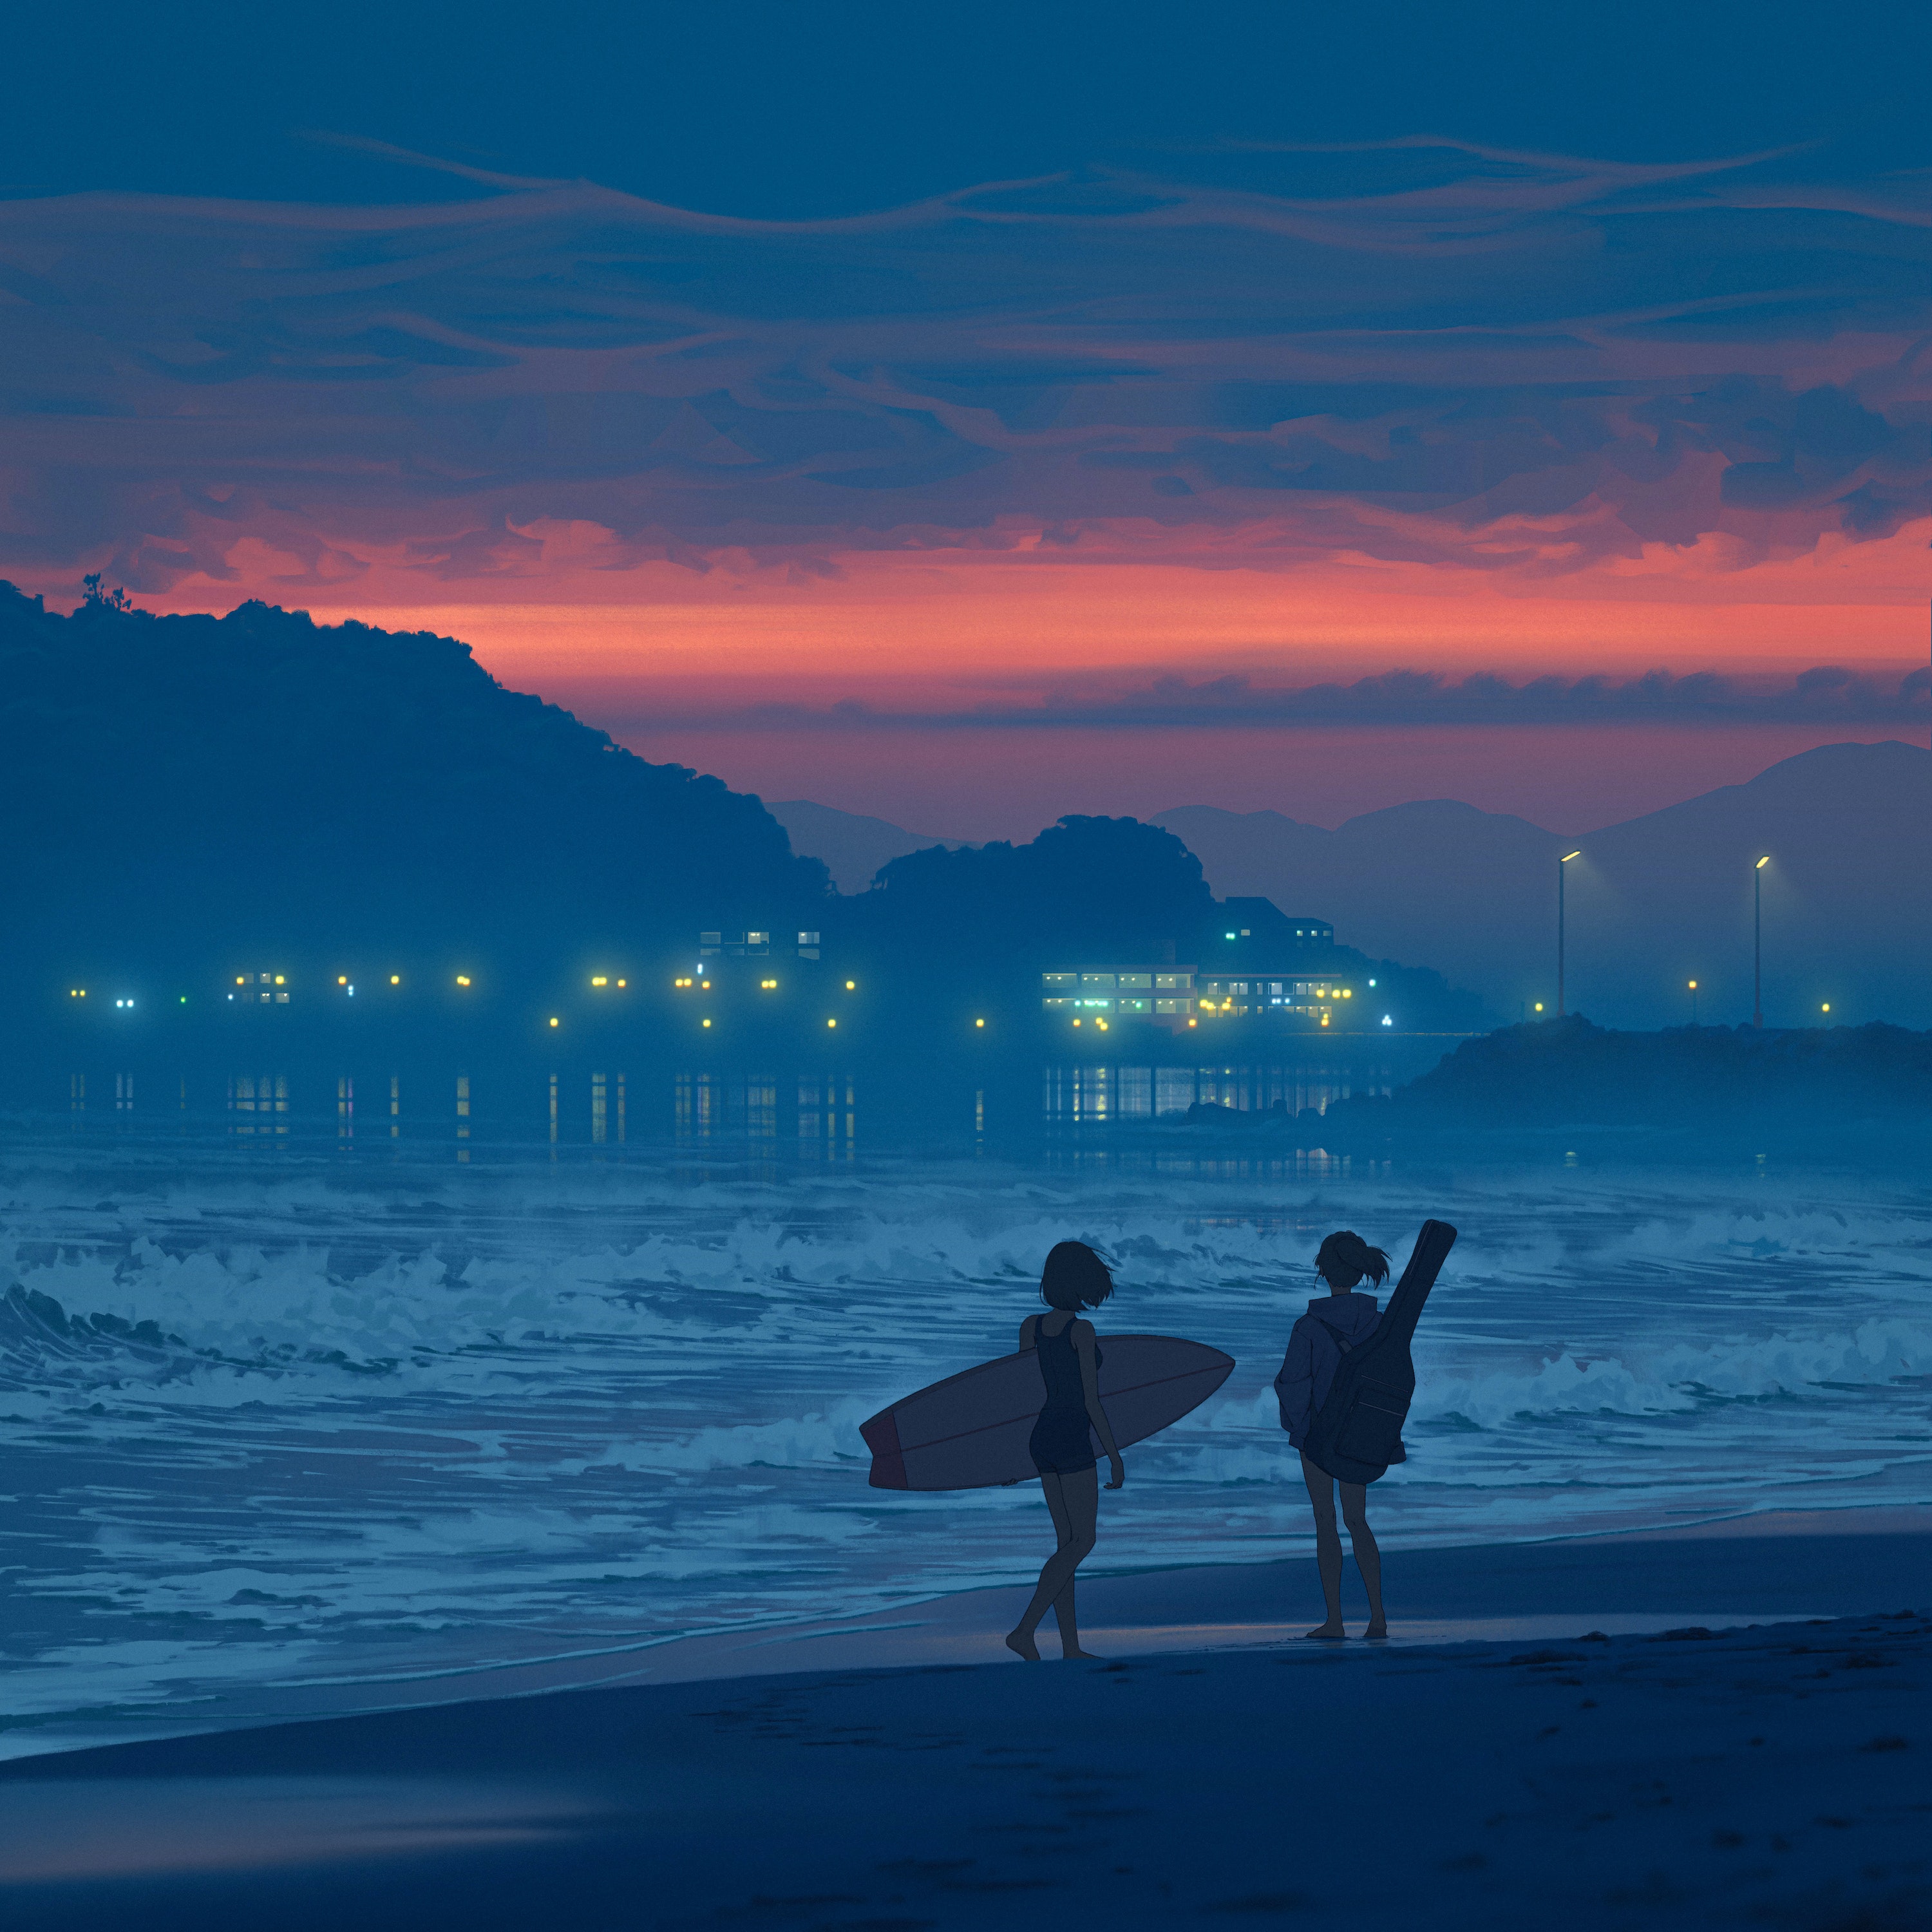 Bysau Digital Art Artwork Illustration Beach Sunset Couple Waves City Lights Sea Vertical Water Surf 3000x3000